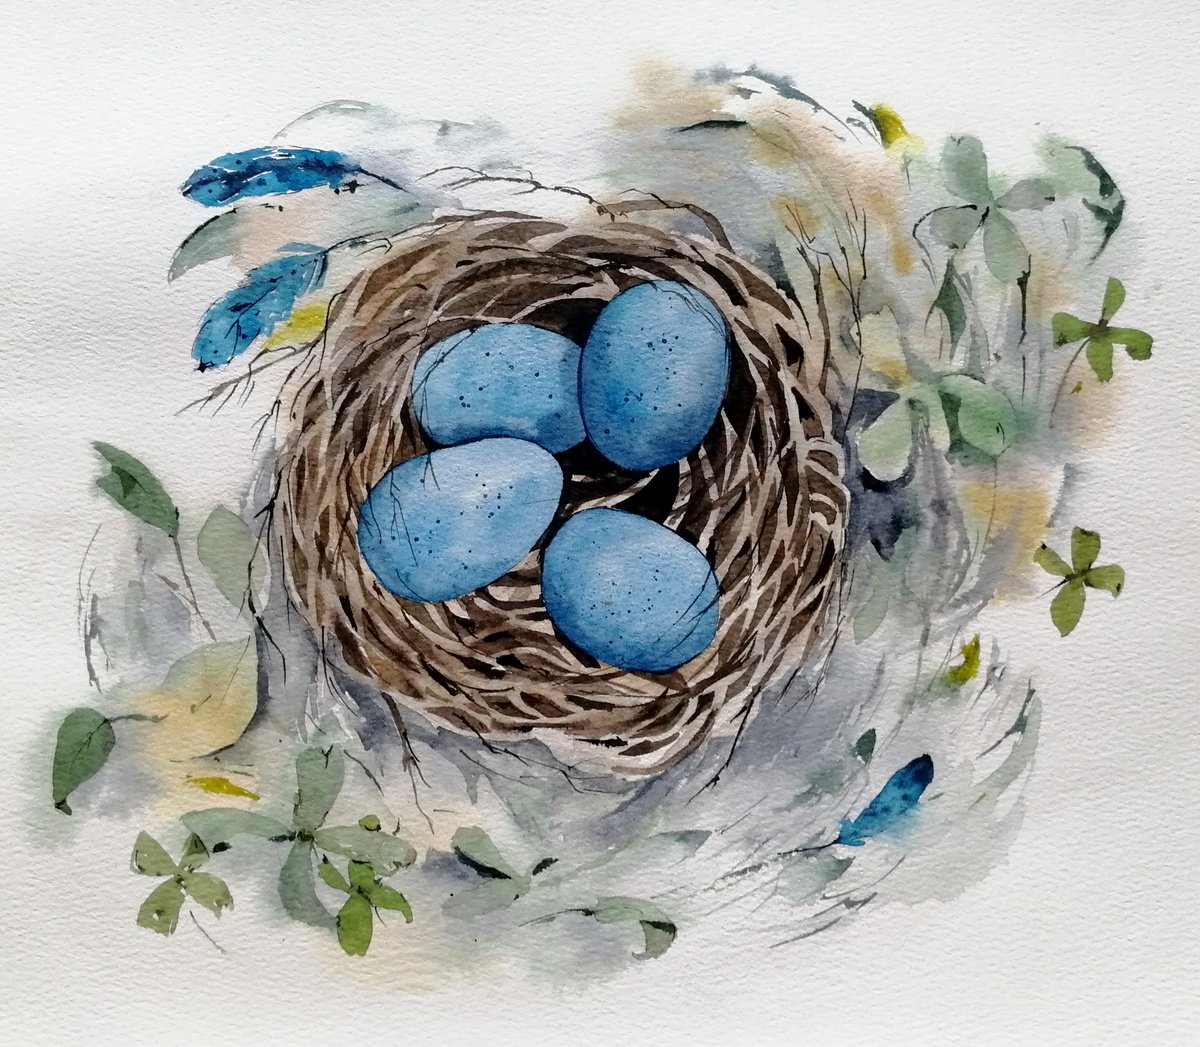 Nest with blue eggs by Marina Zhukova